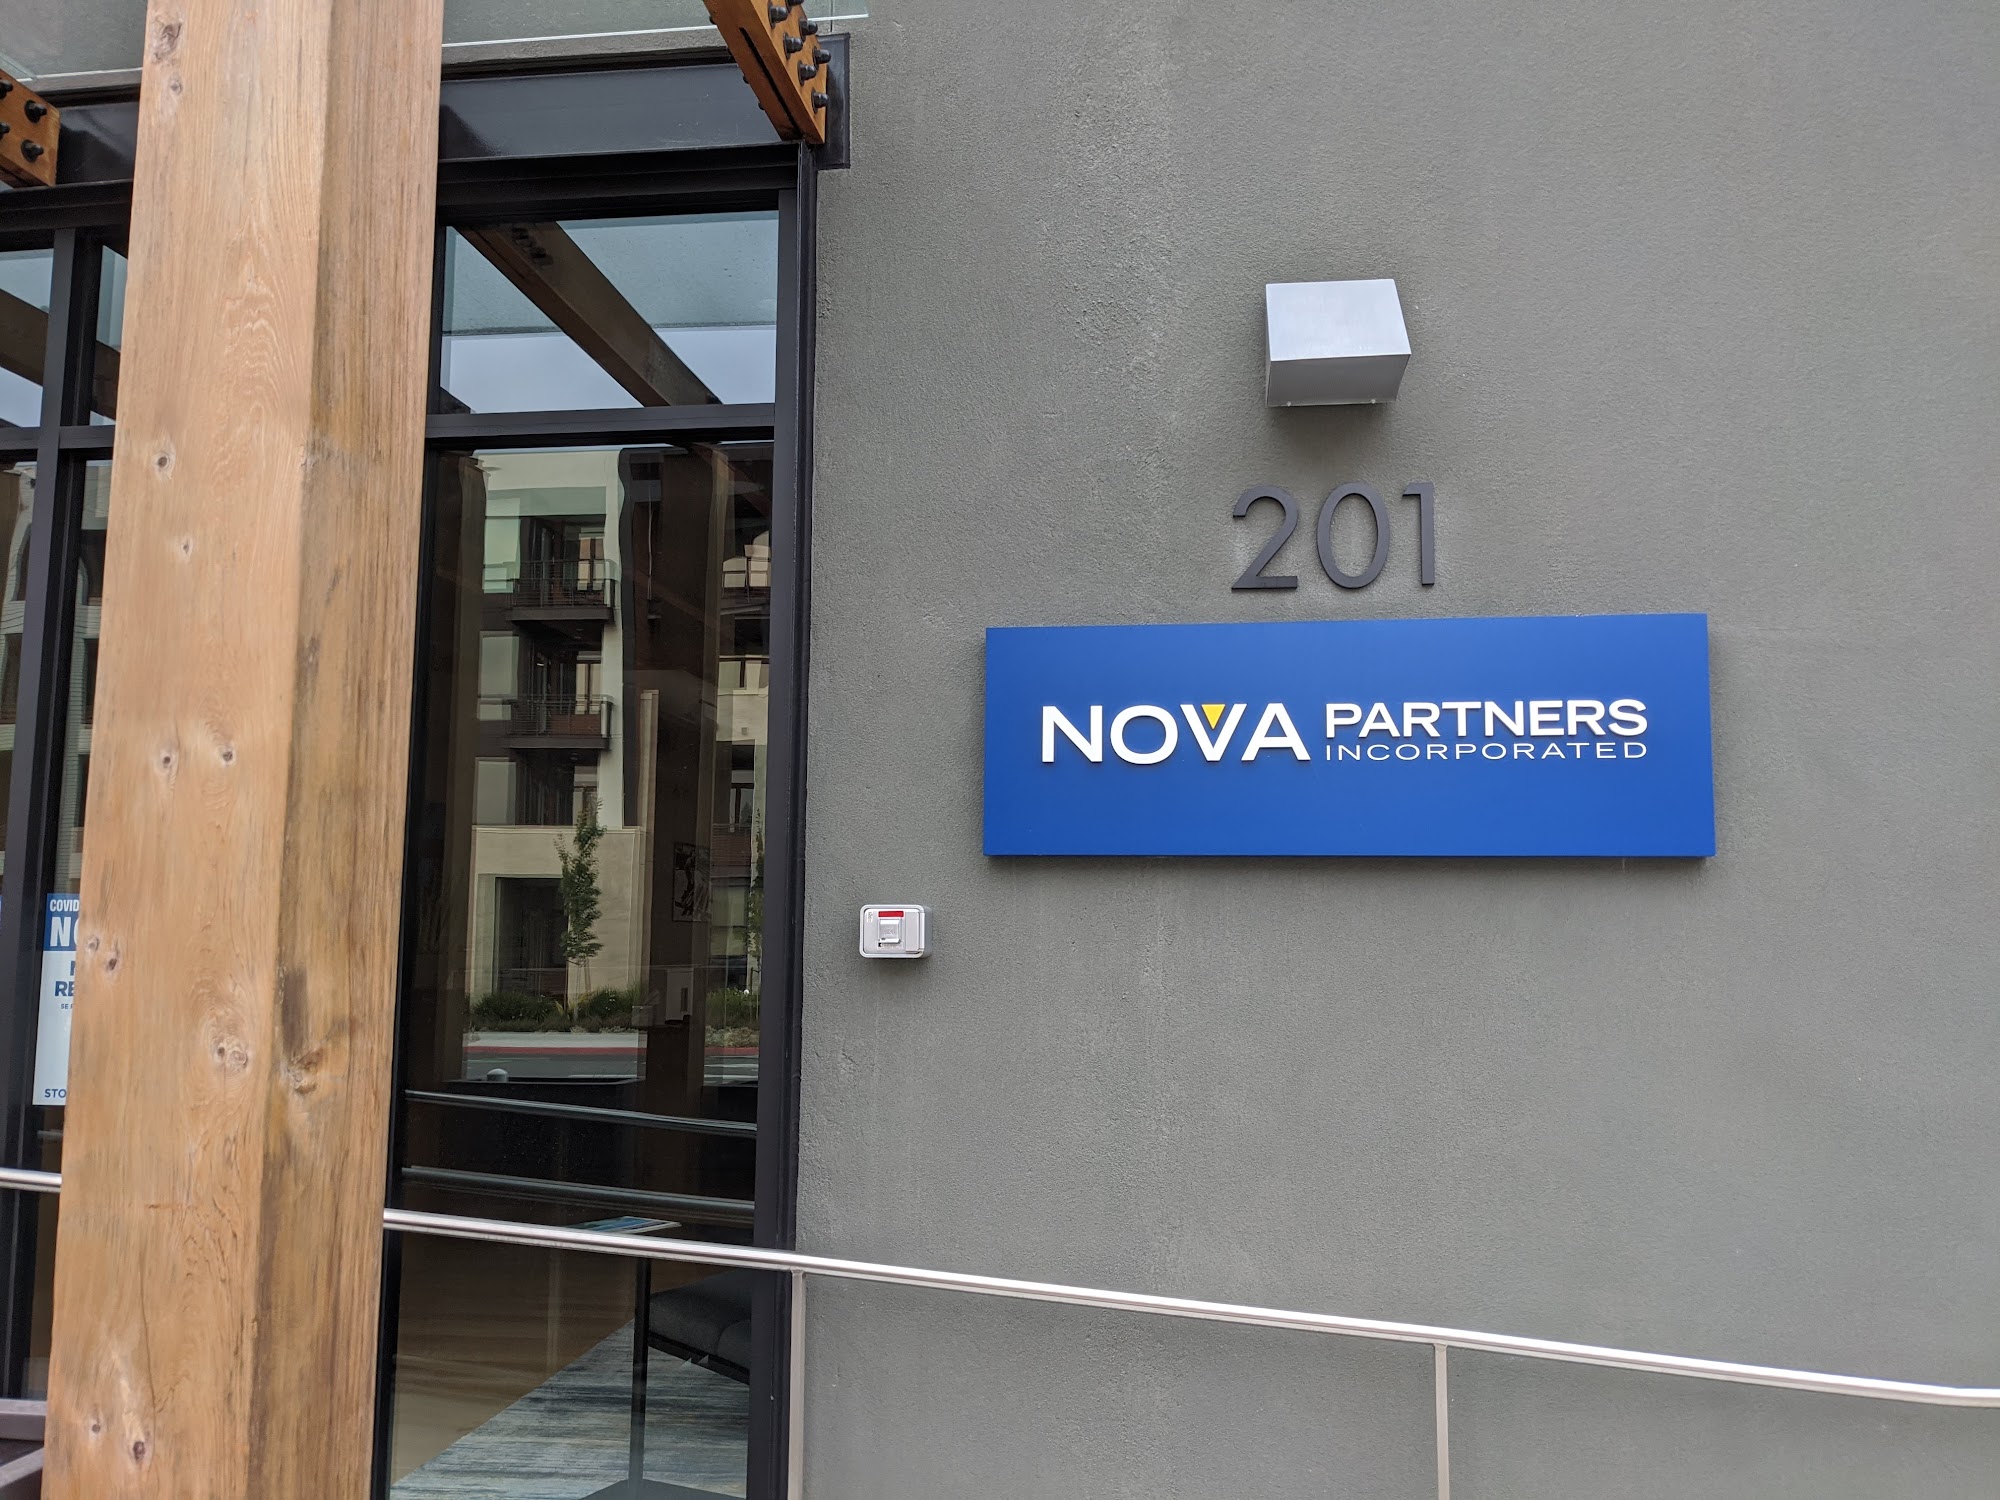 Nova Partners Inc 201 Moffett Blvd, Mountain View